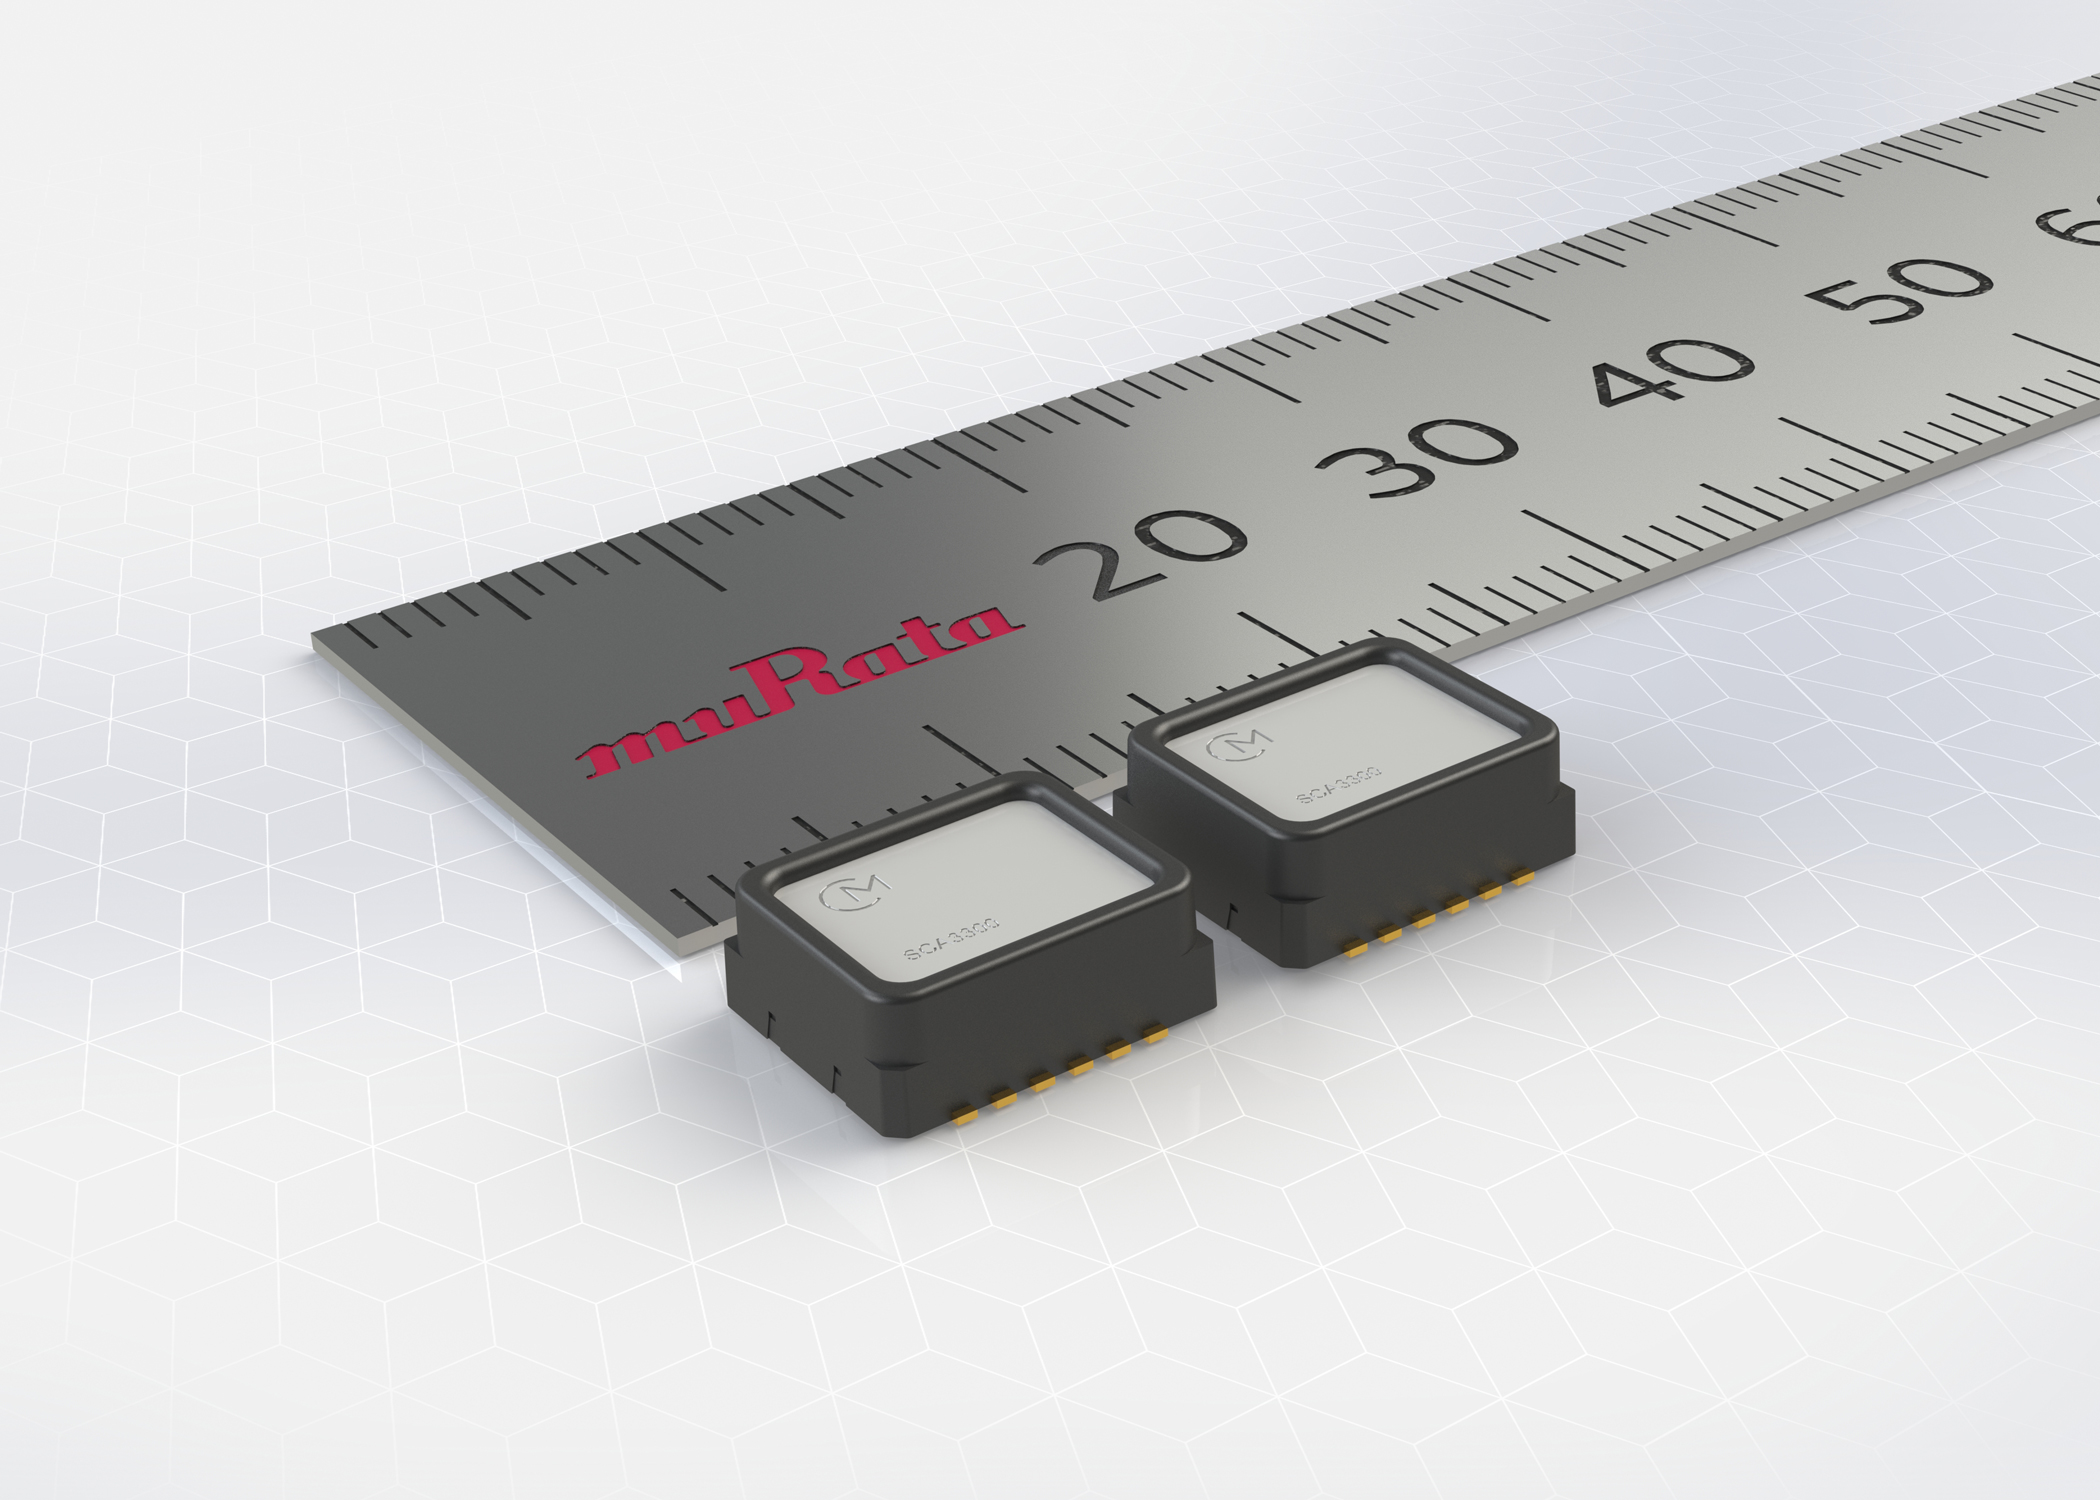 Murata's SCA3300 MEMS 3 axis accelerometer 